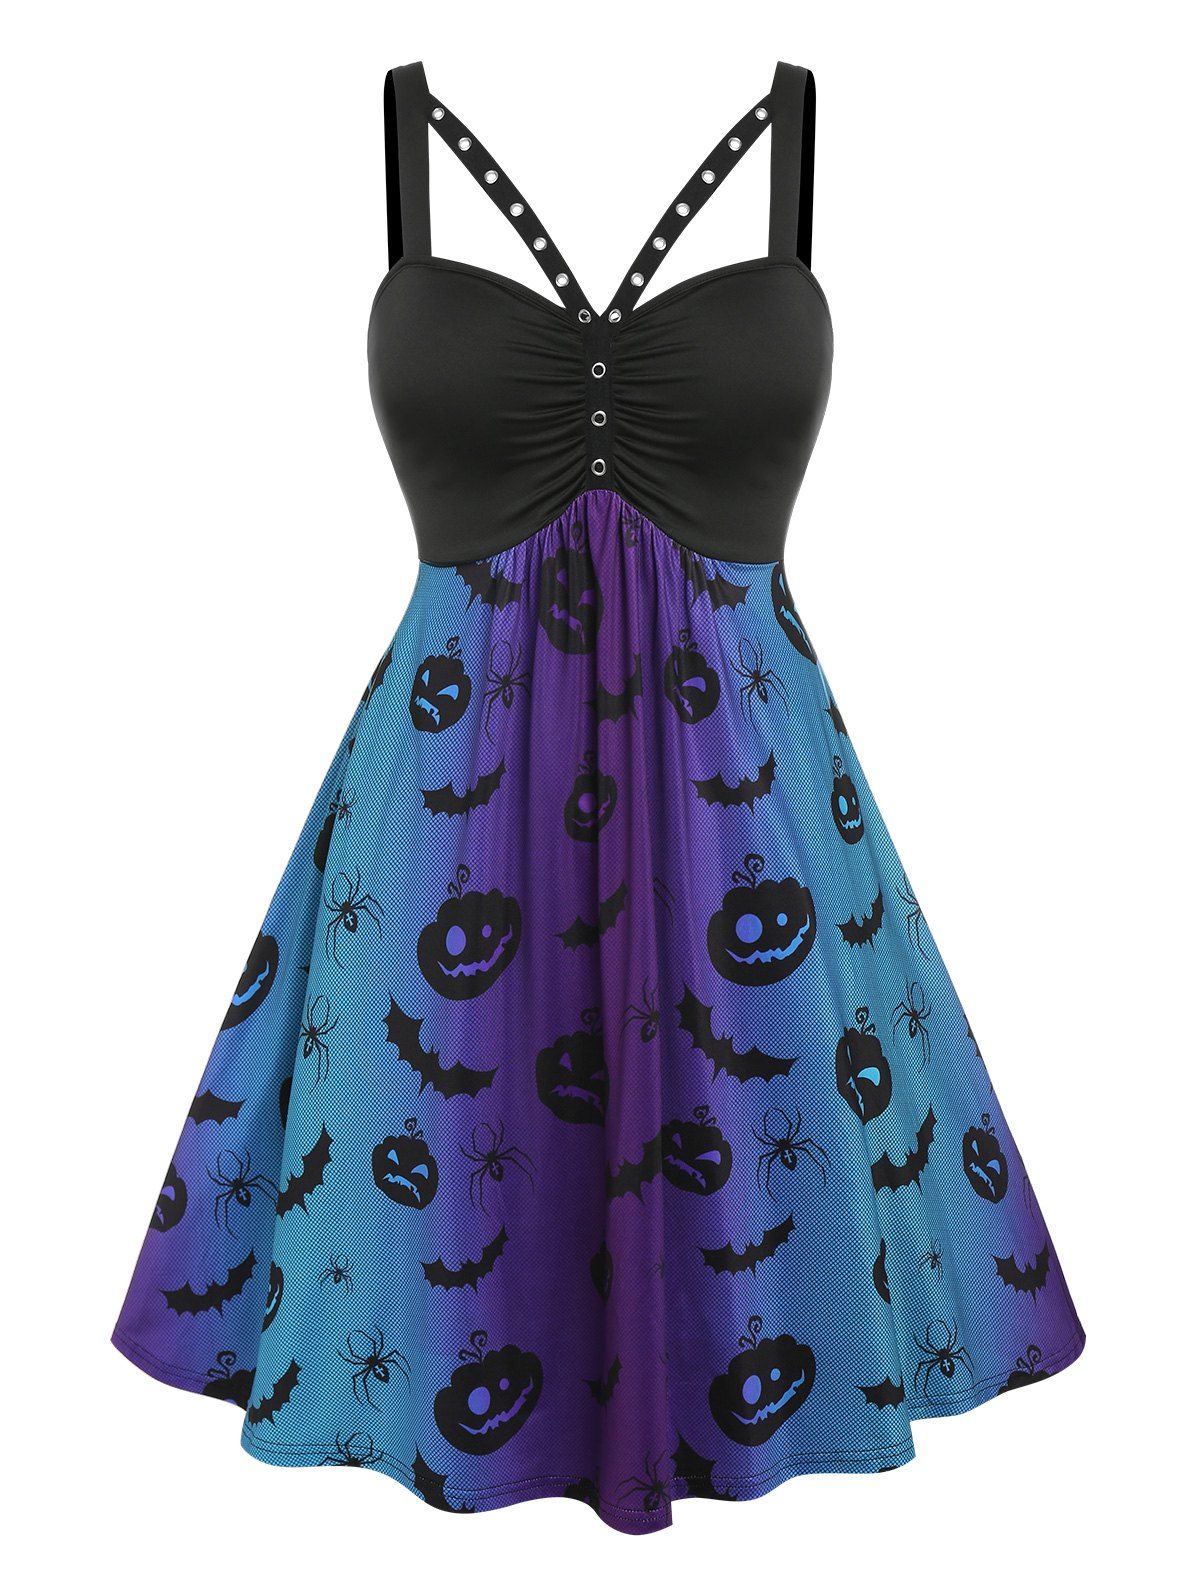 Plus Size Grommet Pumpkin Bat Print Dress - BLACK 1X